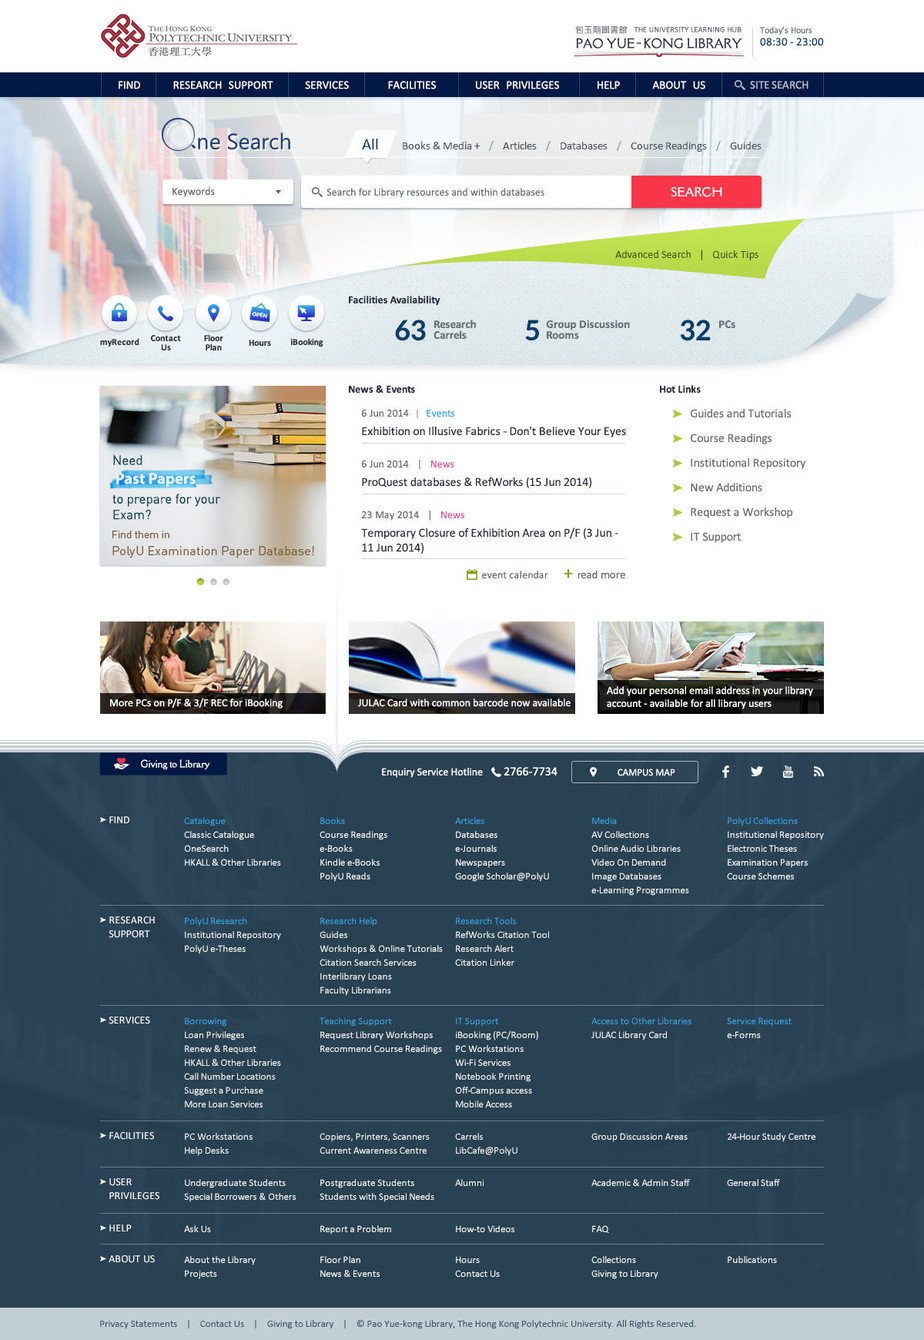 Hong Kong Polytechnic University website screenshot for desktop version 1 of 2